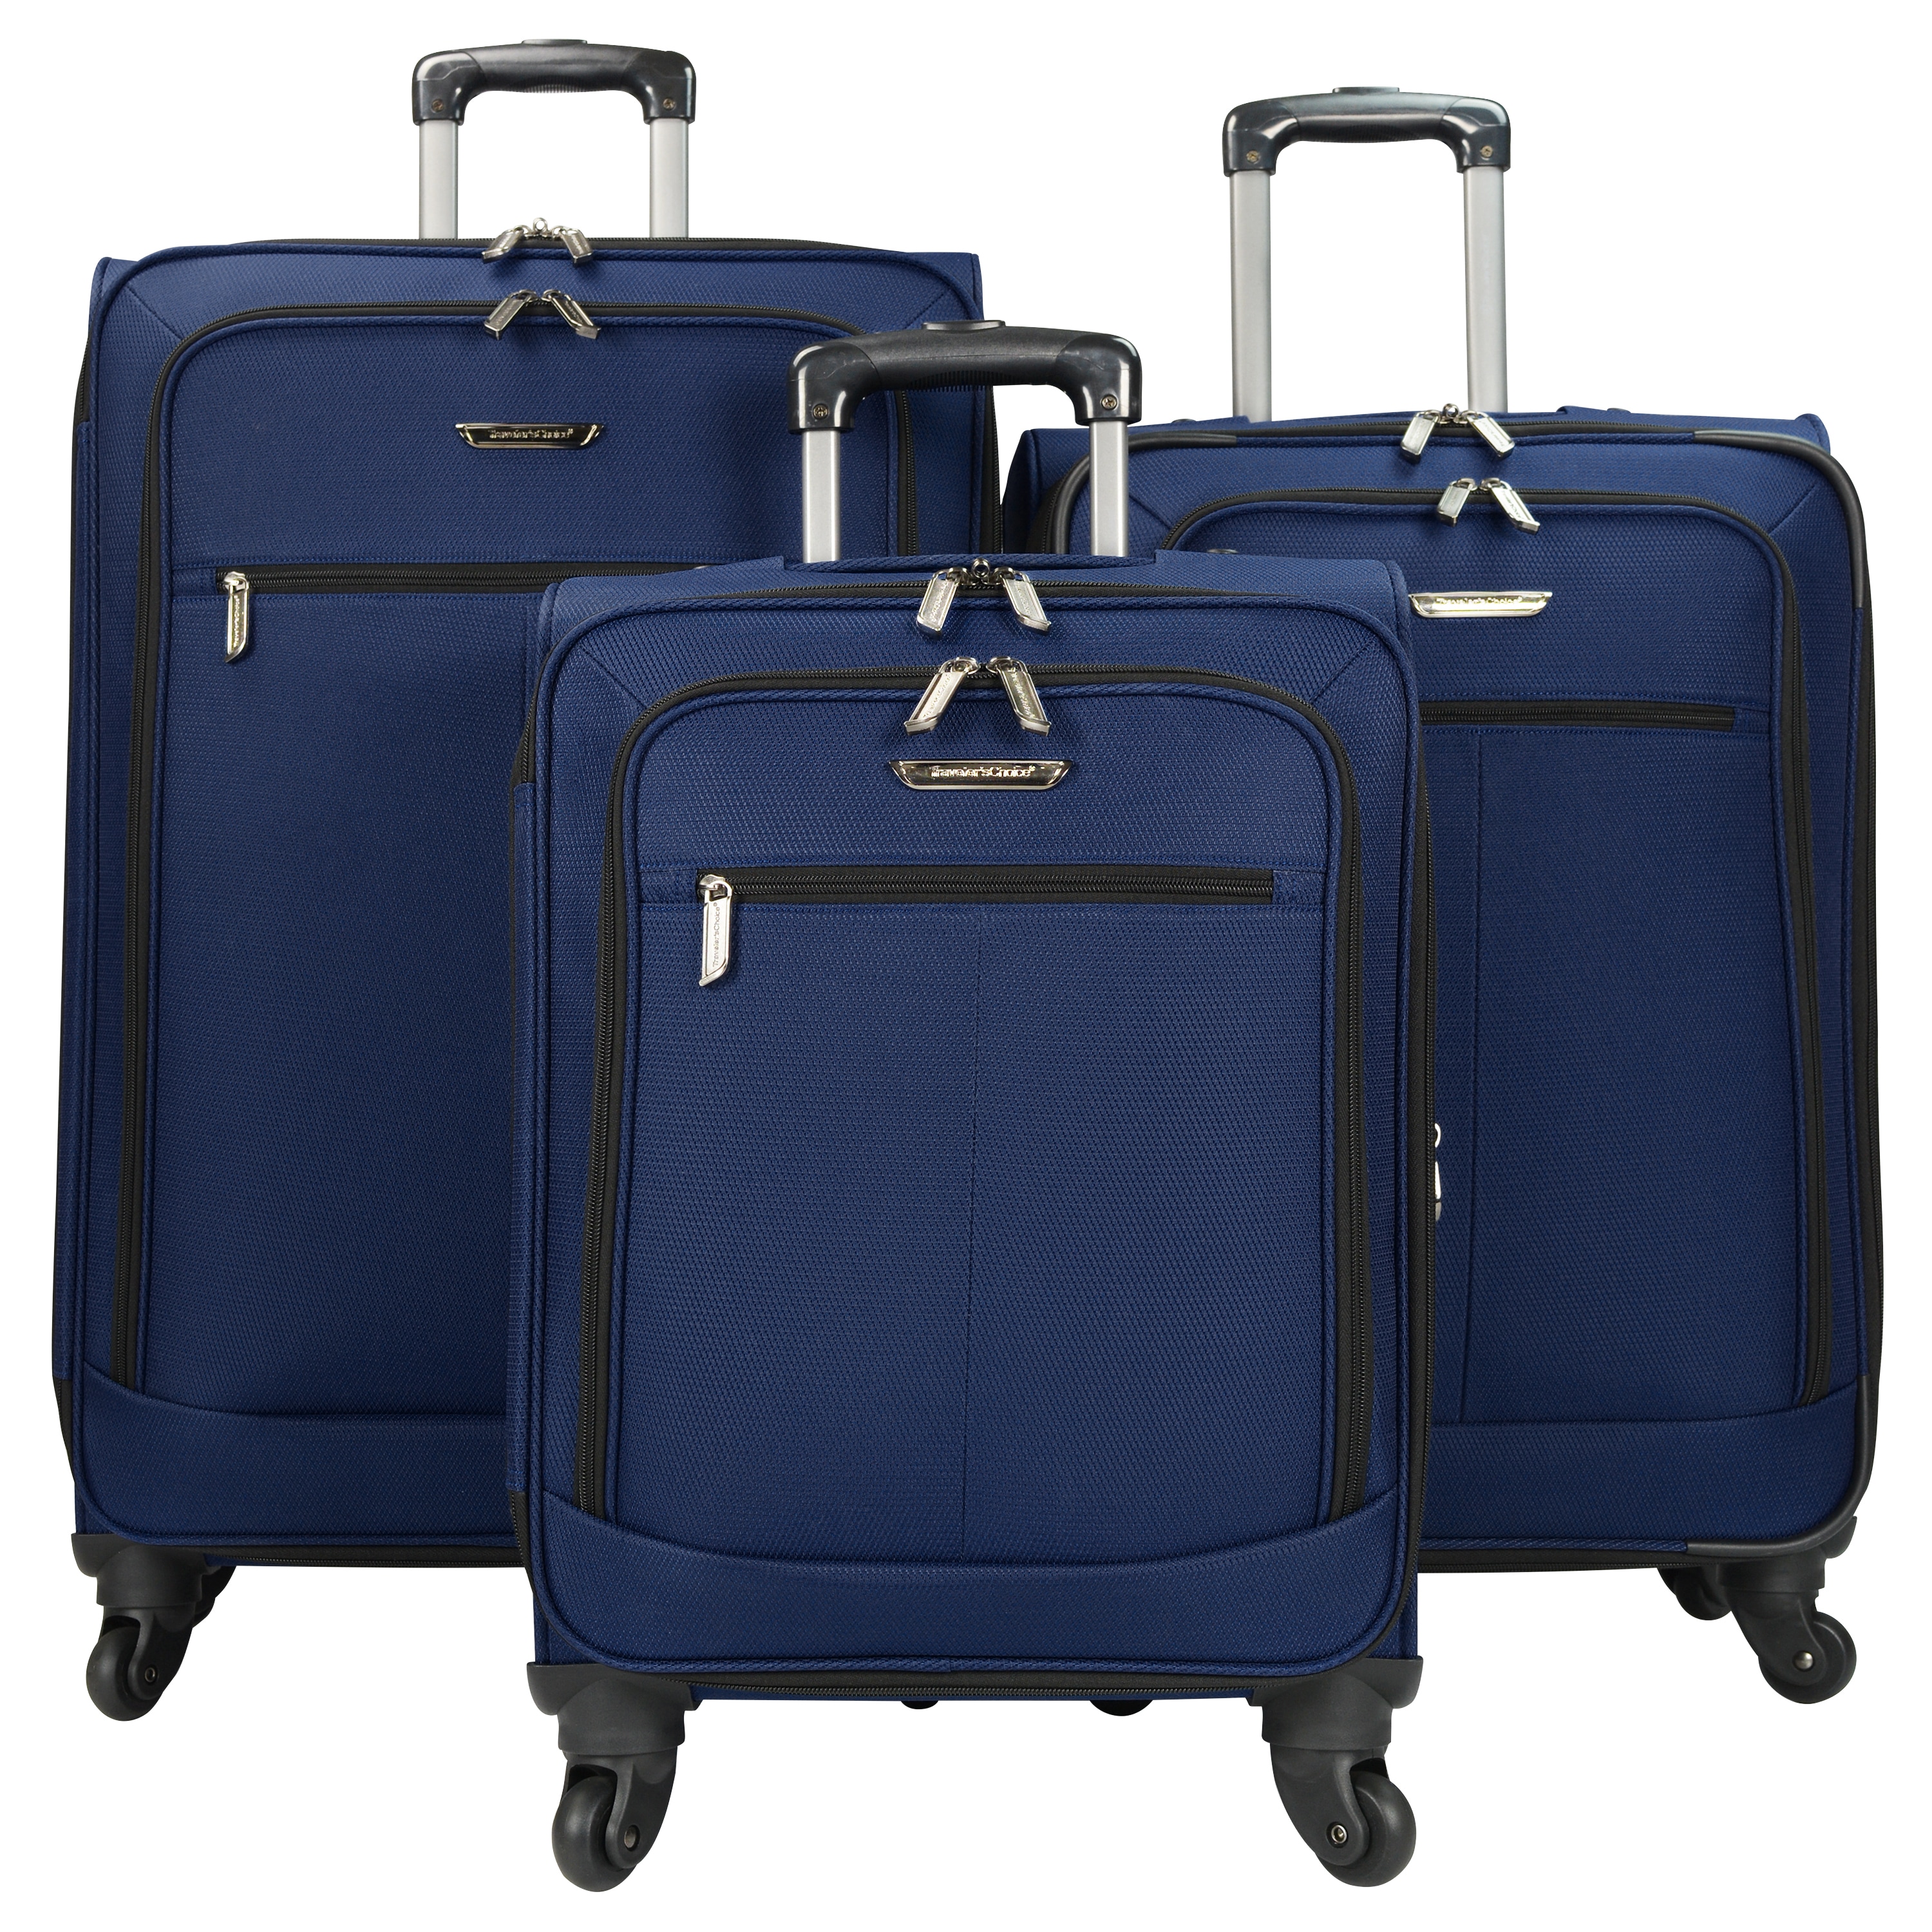 Traveler's Choice Lightweight Expandable 3-piece Spinner Luggage Set | eBay